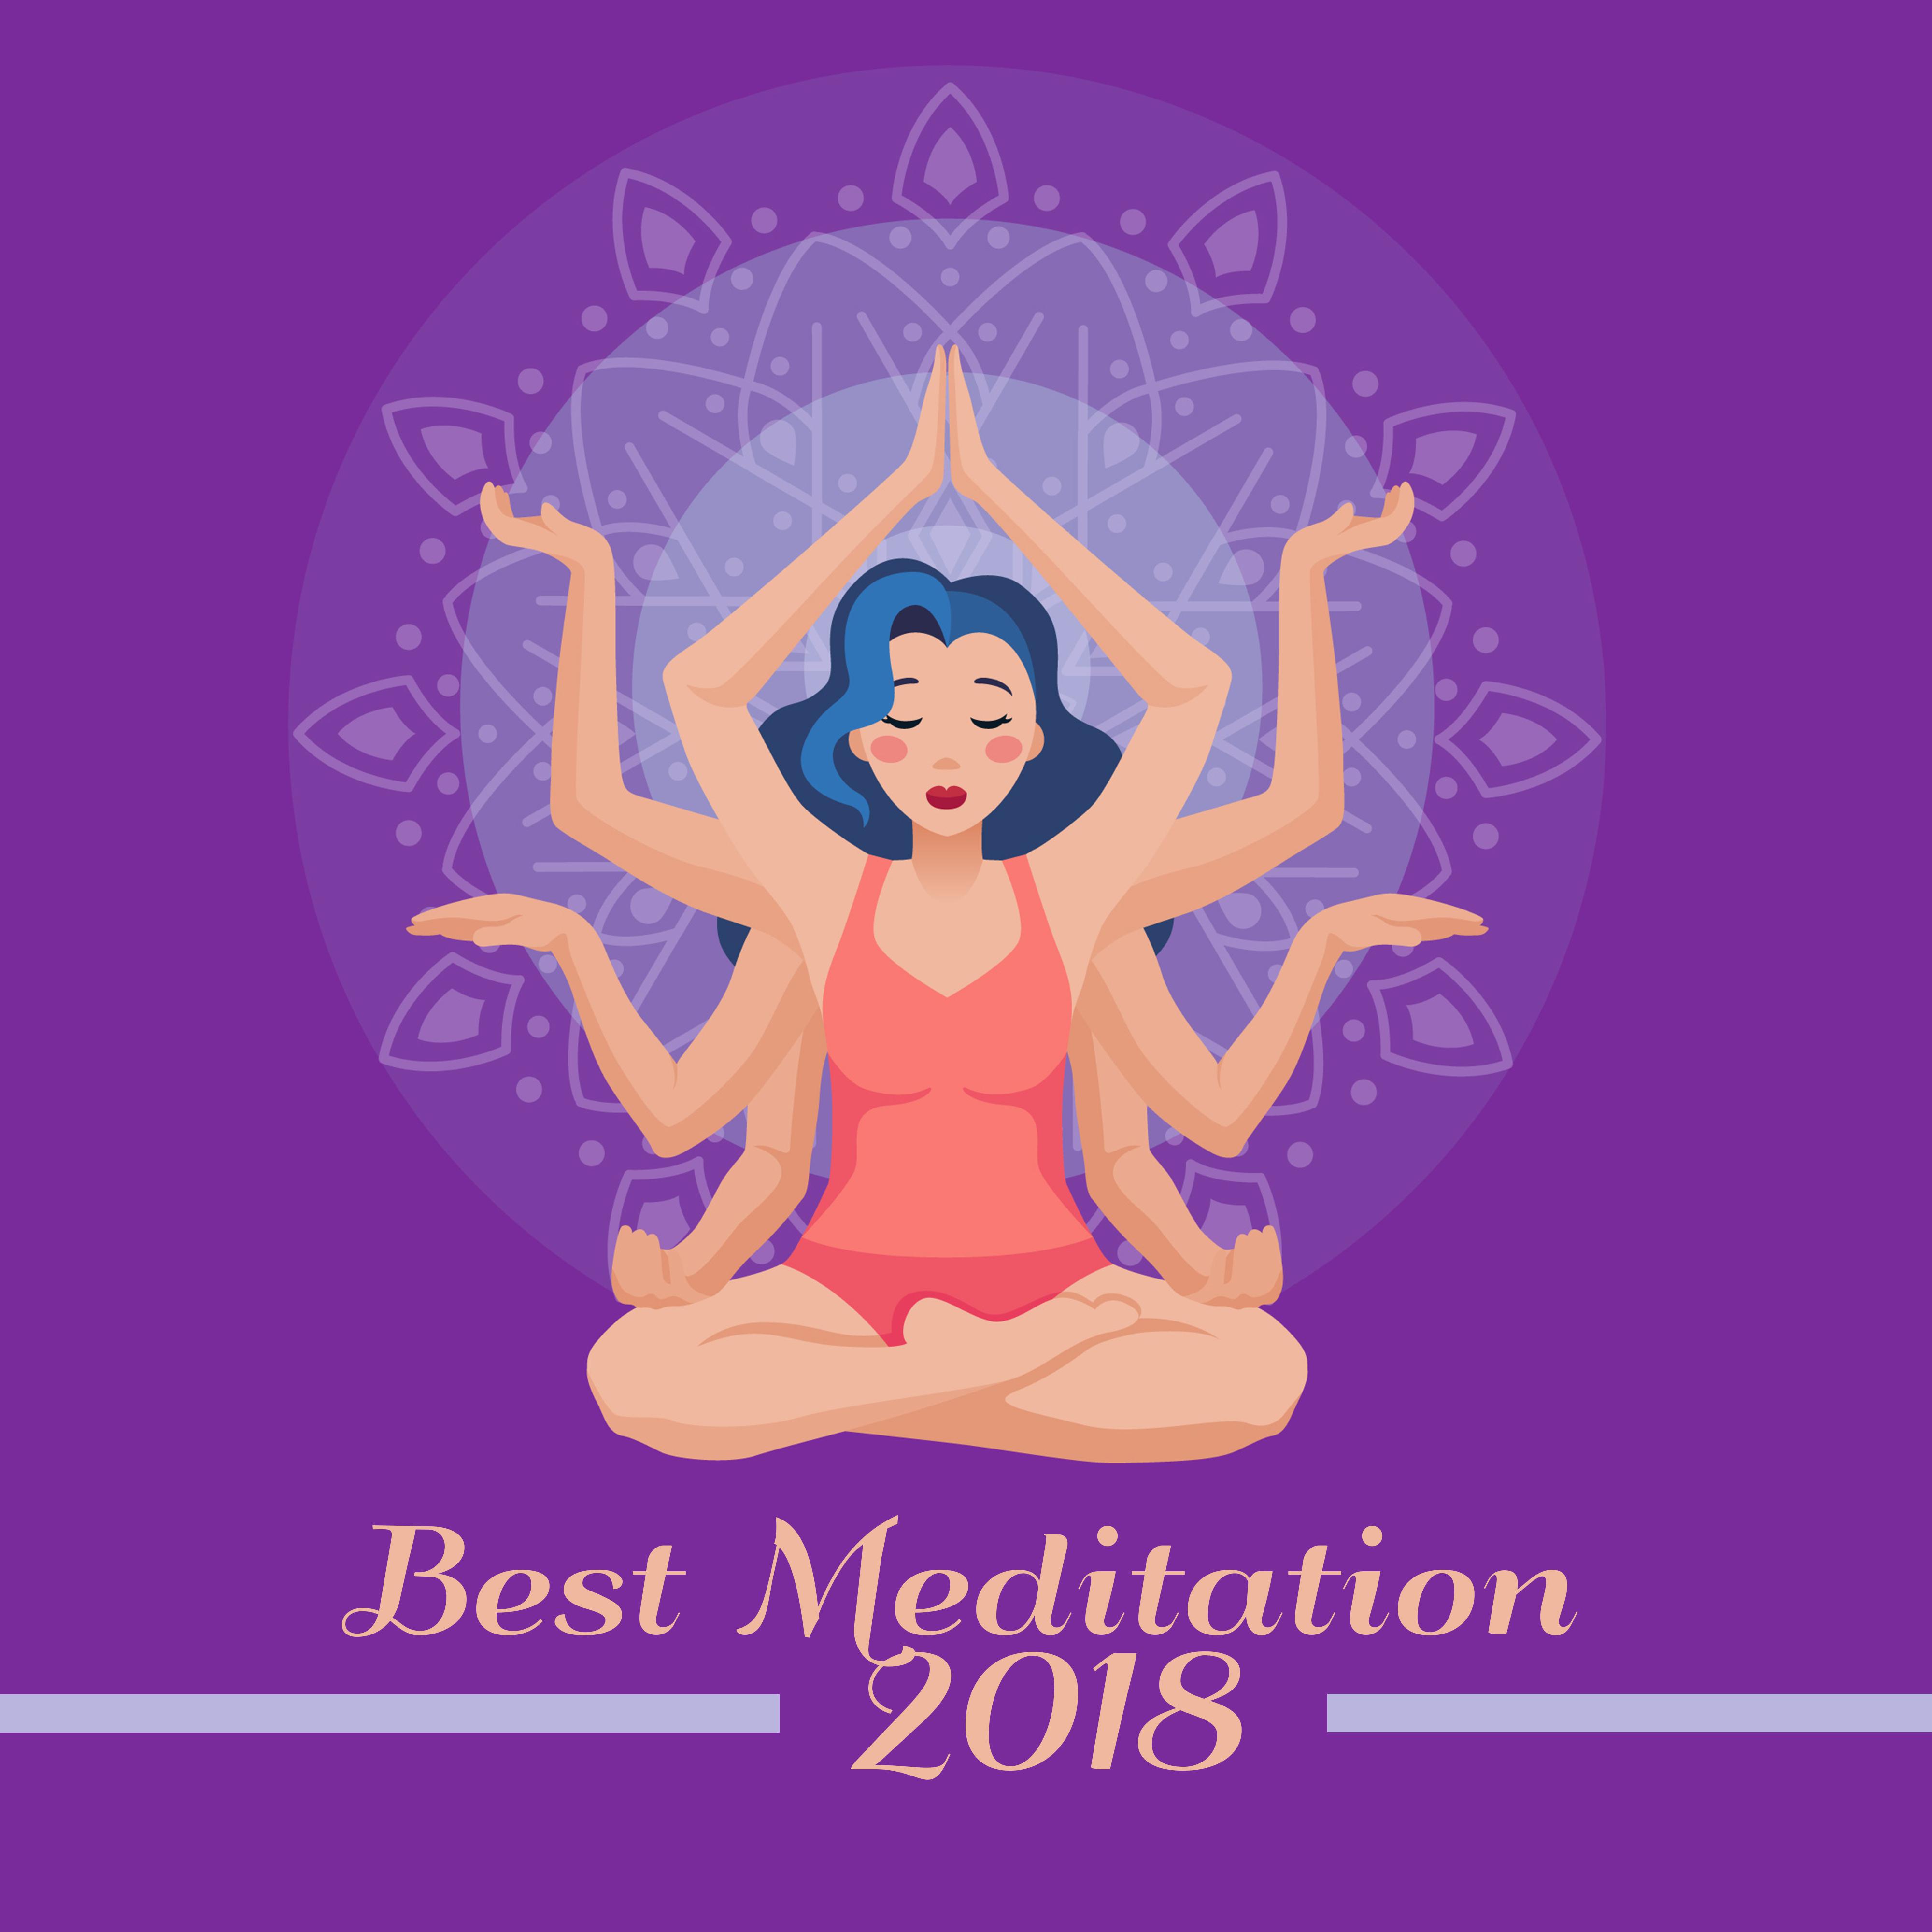 Best Meditation 2018